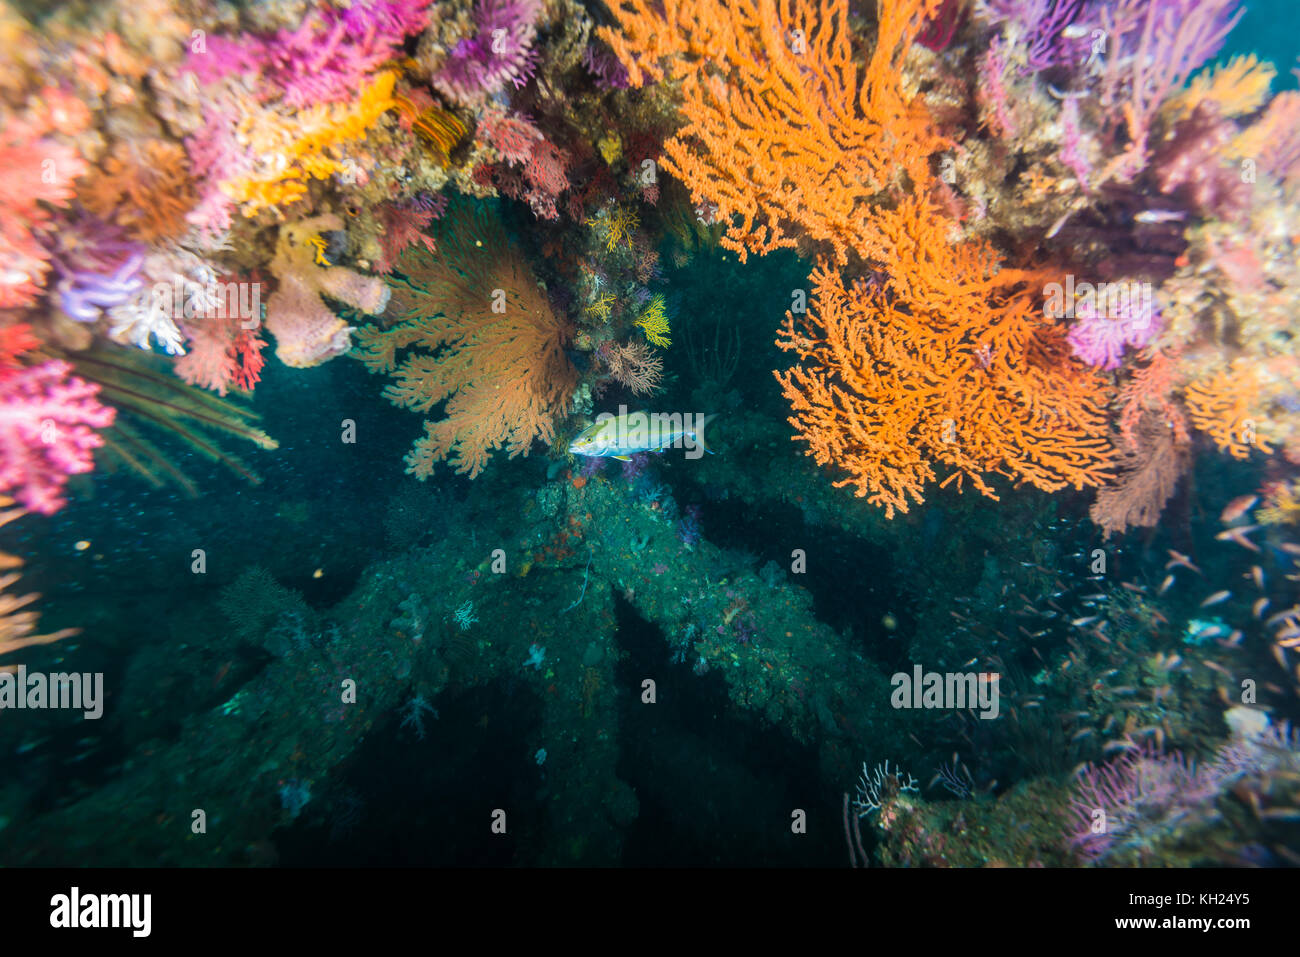 Greater amberjack, Seriola dumerili  (Risso, 1810) and soft coral reef. Owase, Mie, Japan Stock Photo